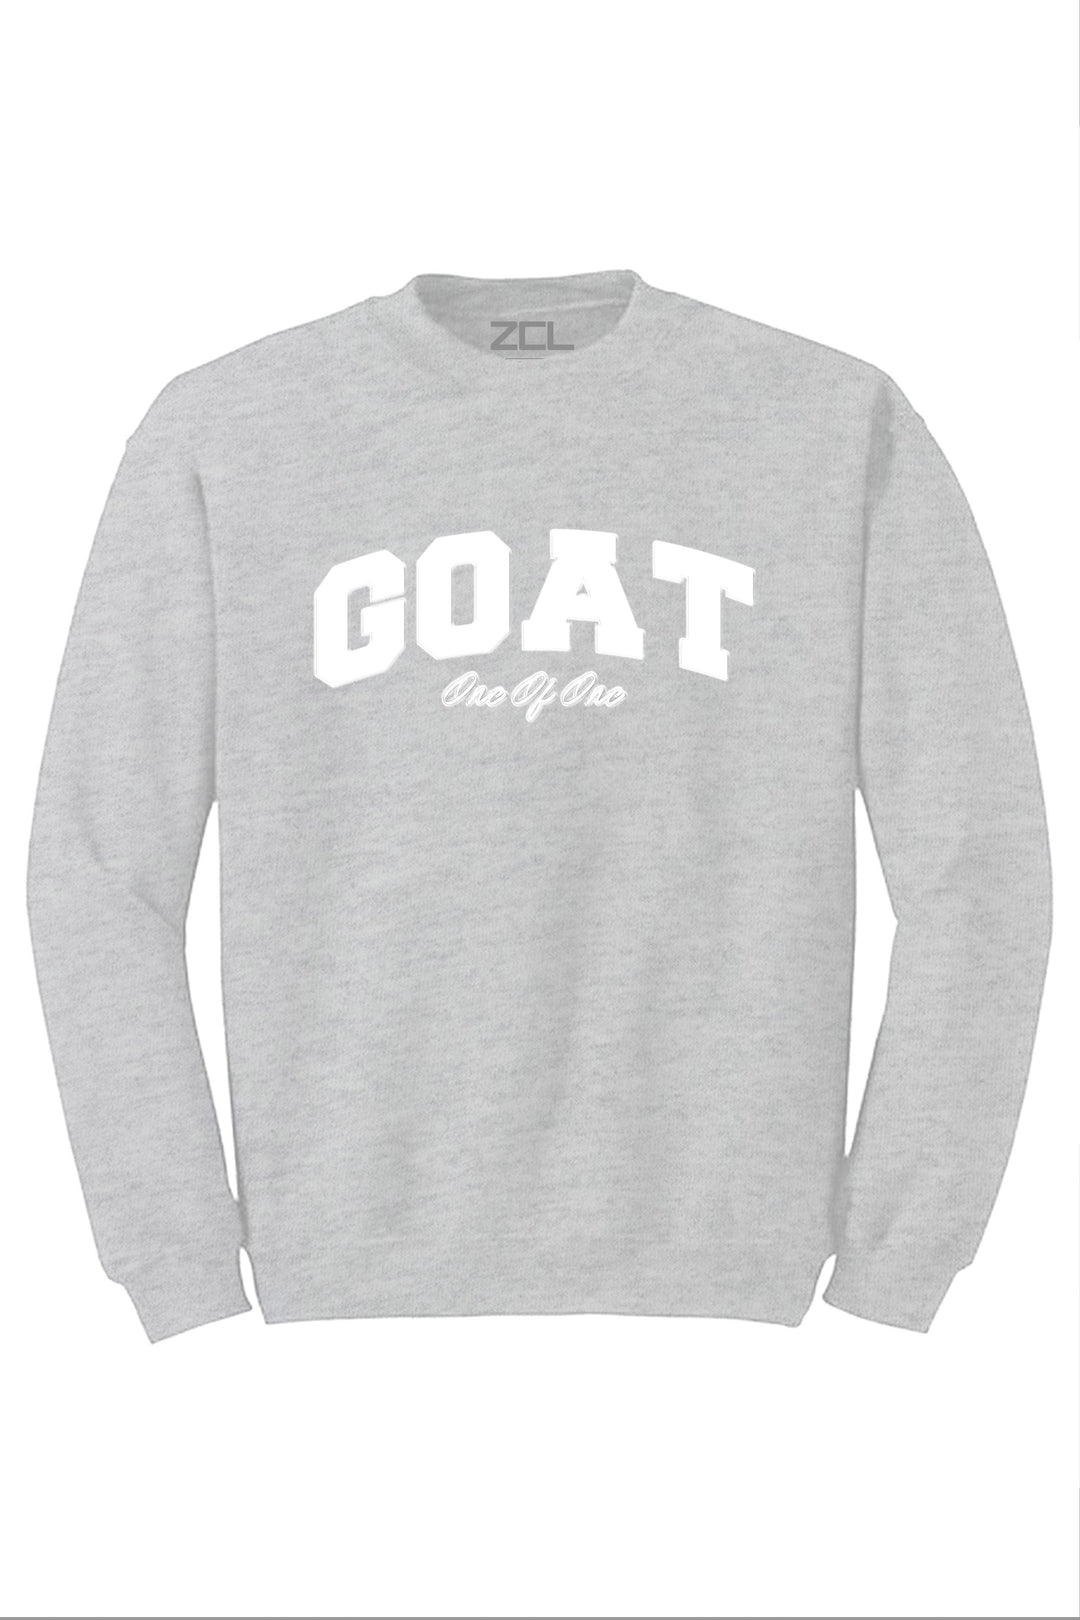 Puff Print Goat Crewneck Sweatshirt (White Logo) - Zamage